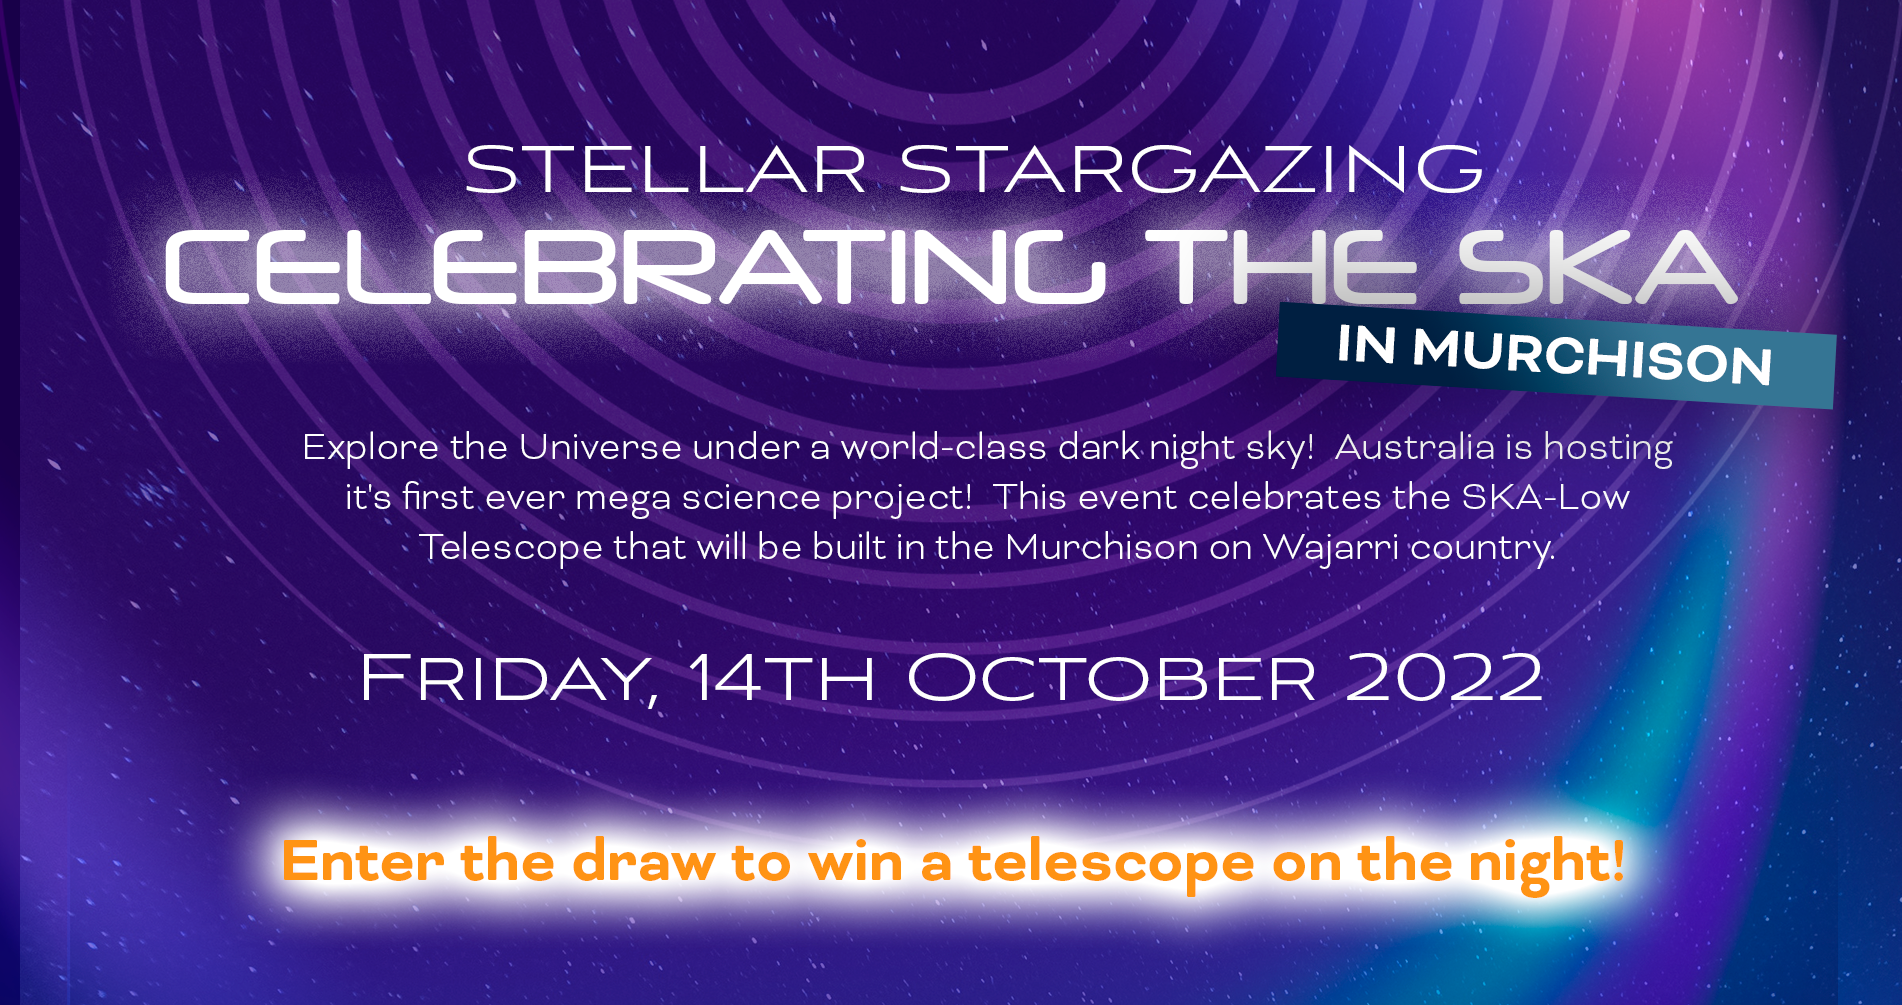 Stellar Stargazing: Celebrating the SKA in Murchison